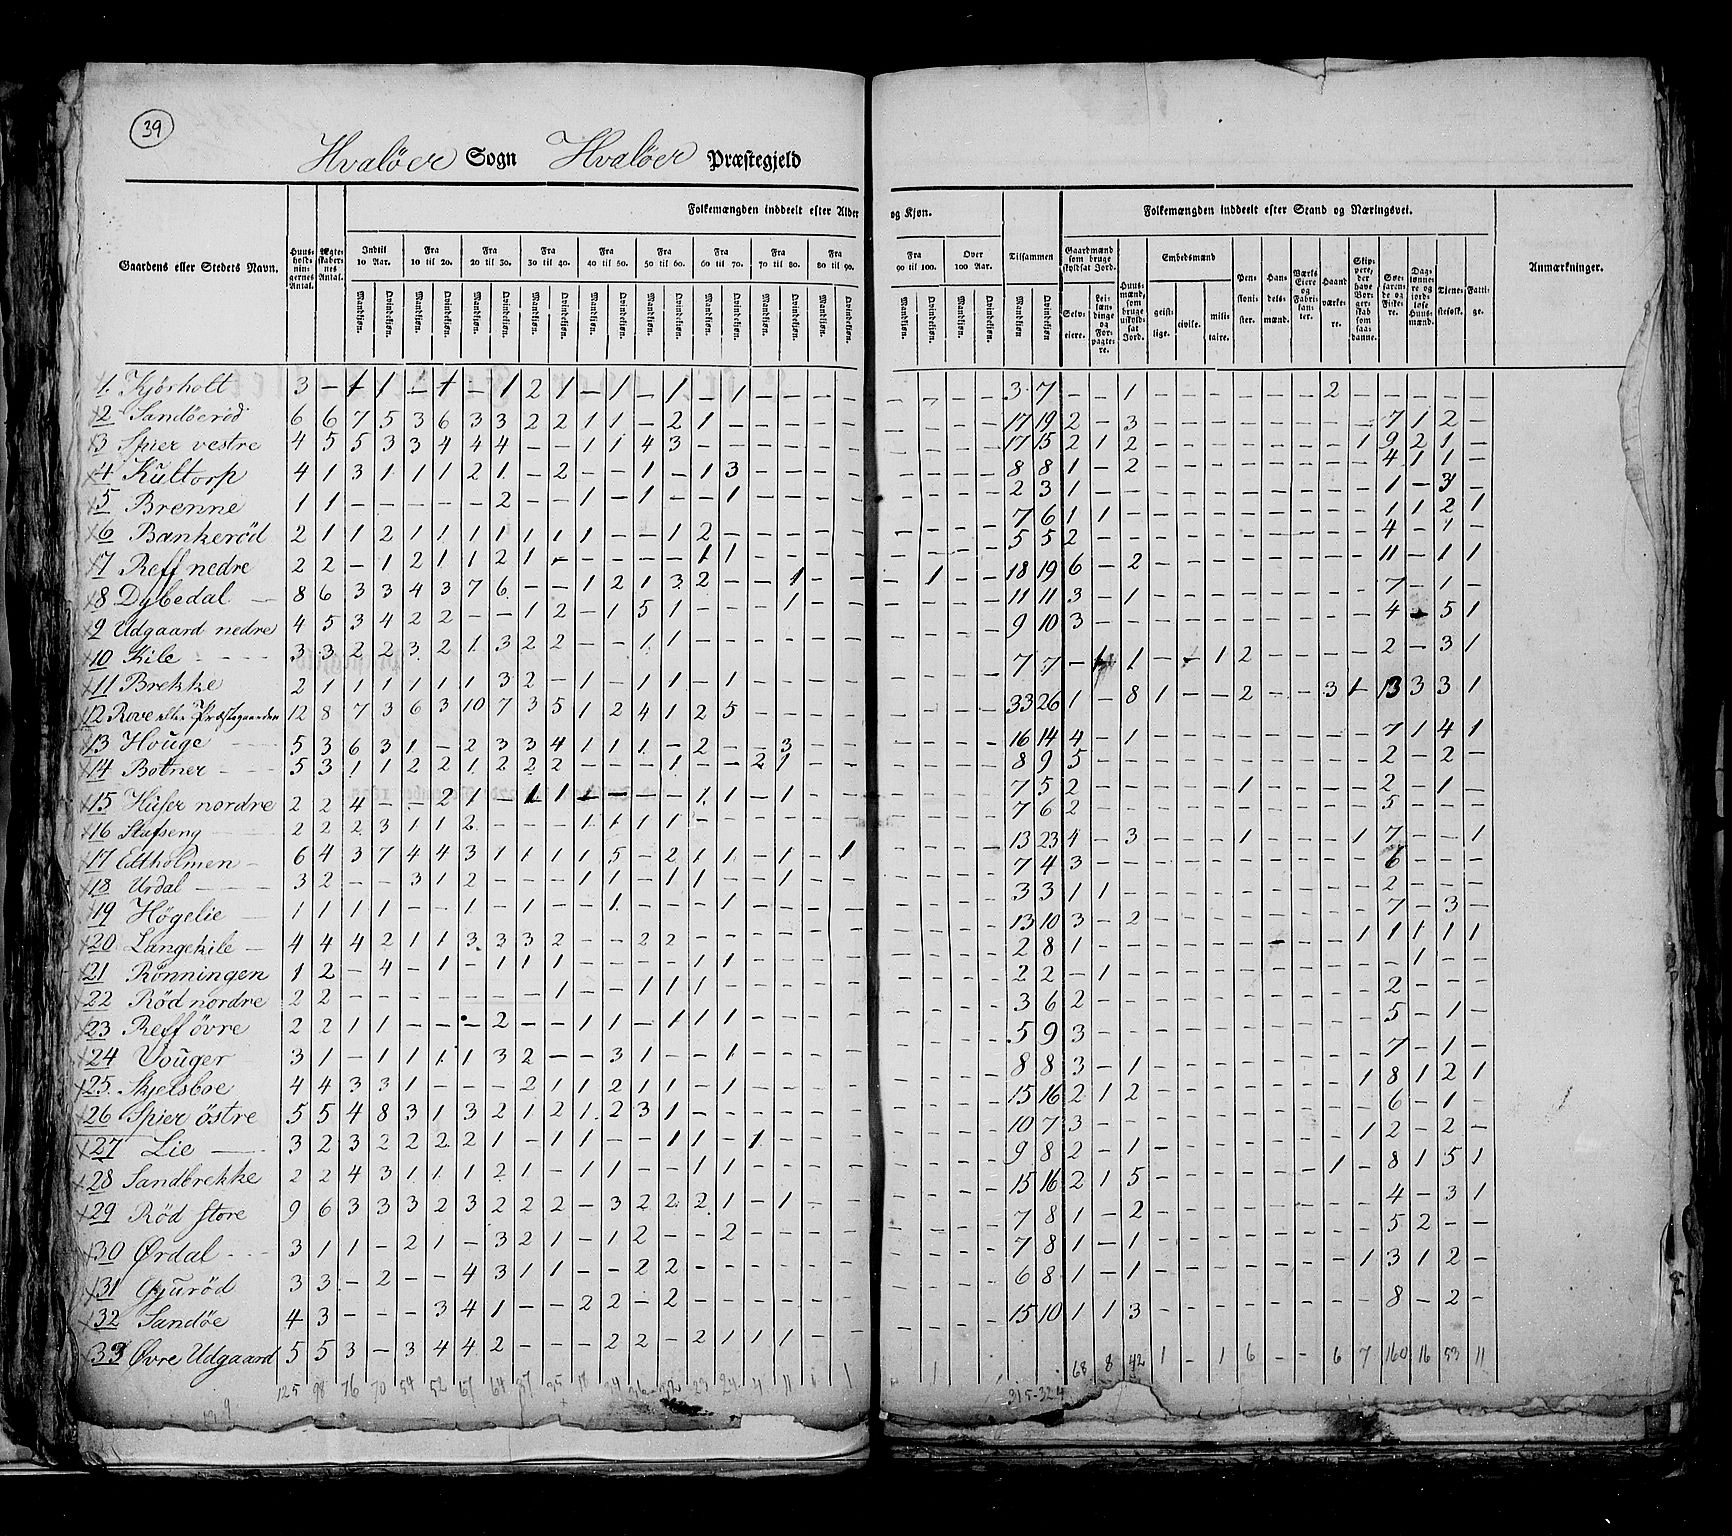 RA, Census 1825, vol. 3: Smålenenes amt, 1825, p. 39